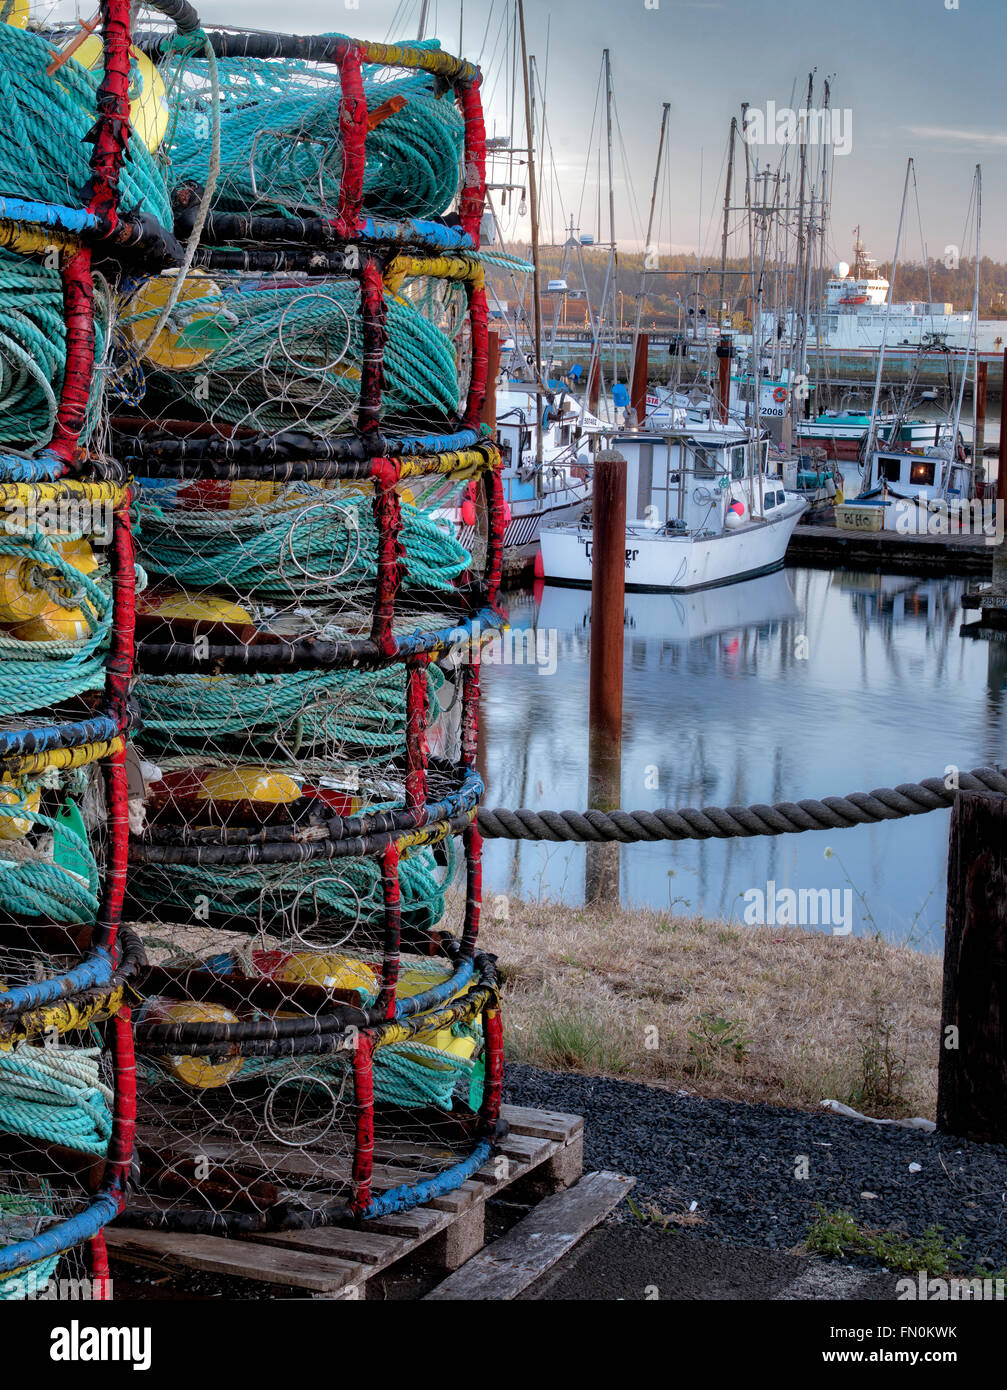 Crab pots and boats at Newport Harbor on the Yaquina River, Oregon Stock Photo